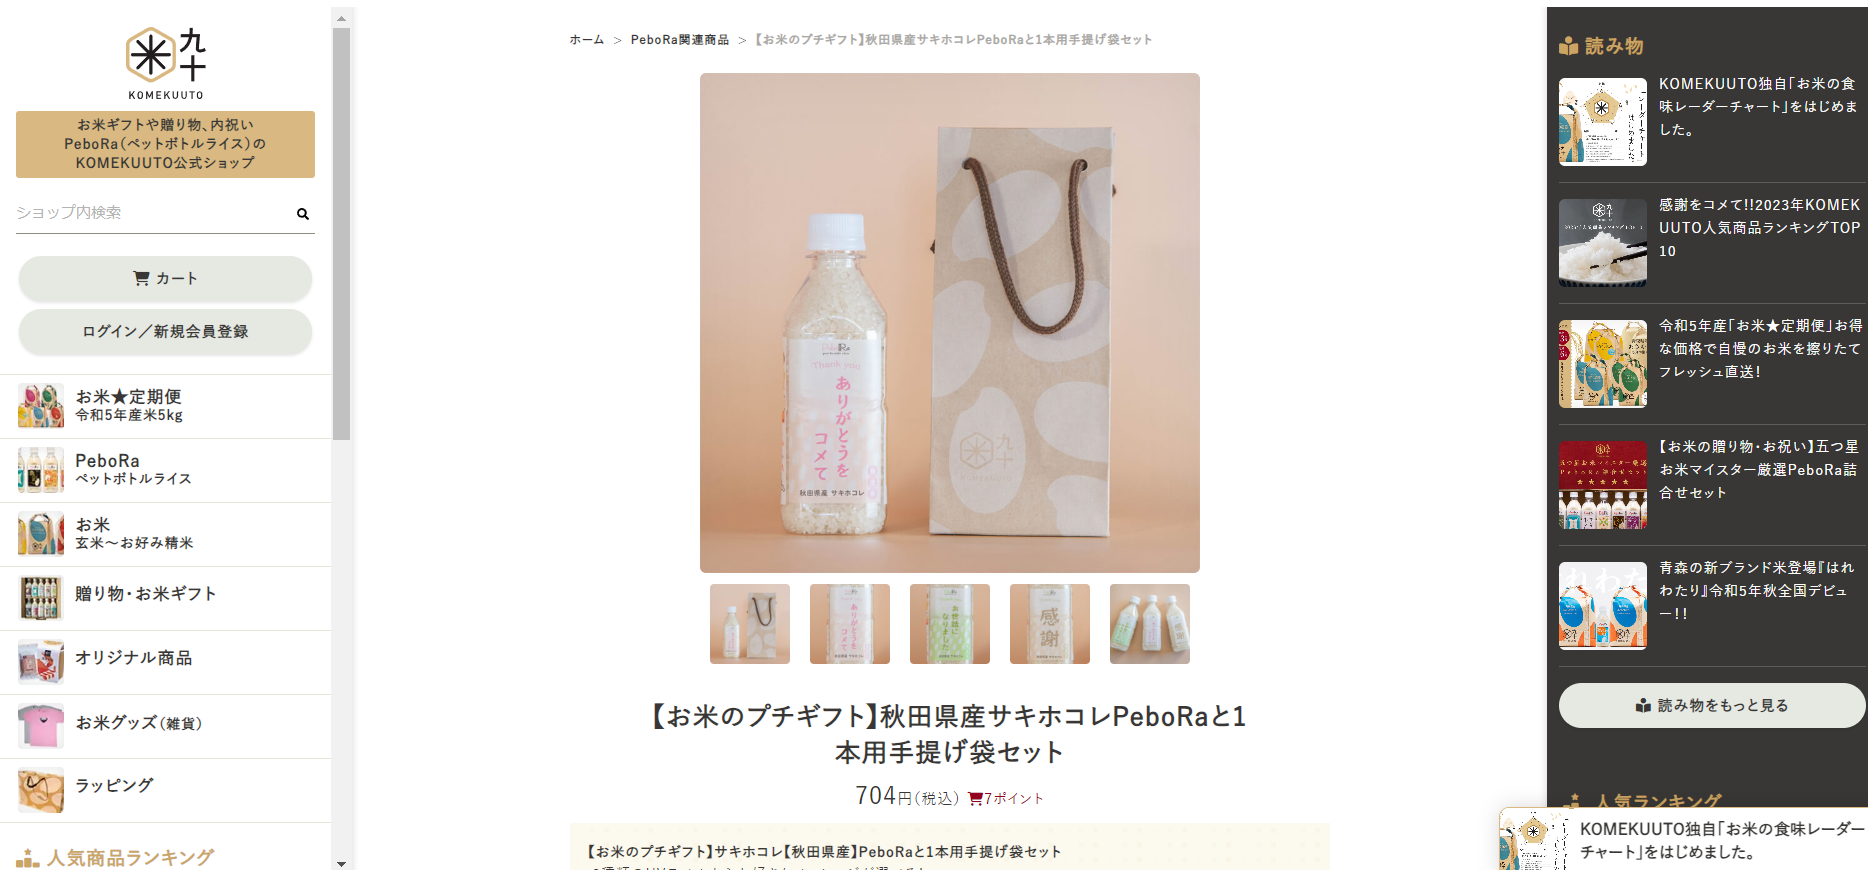 2.PeboRa「秋田県産サキホコレと1本用手提げ袋セット」